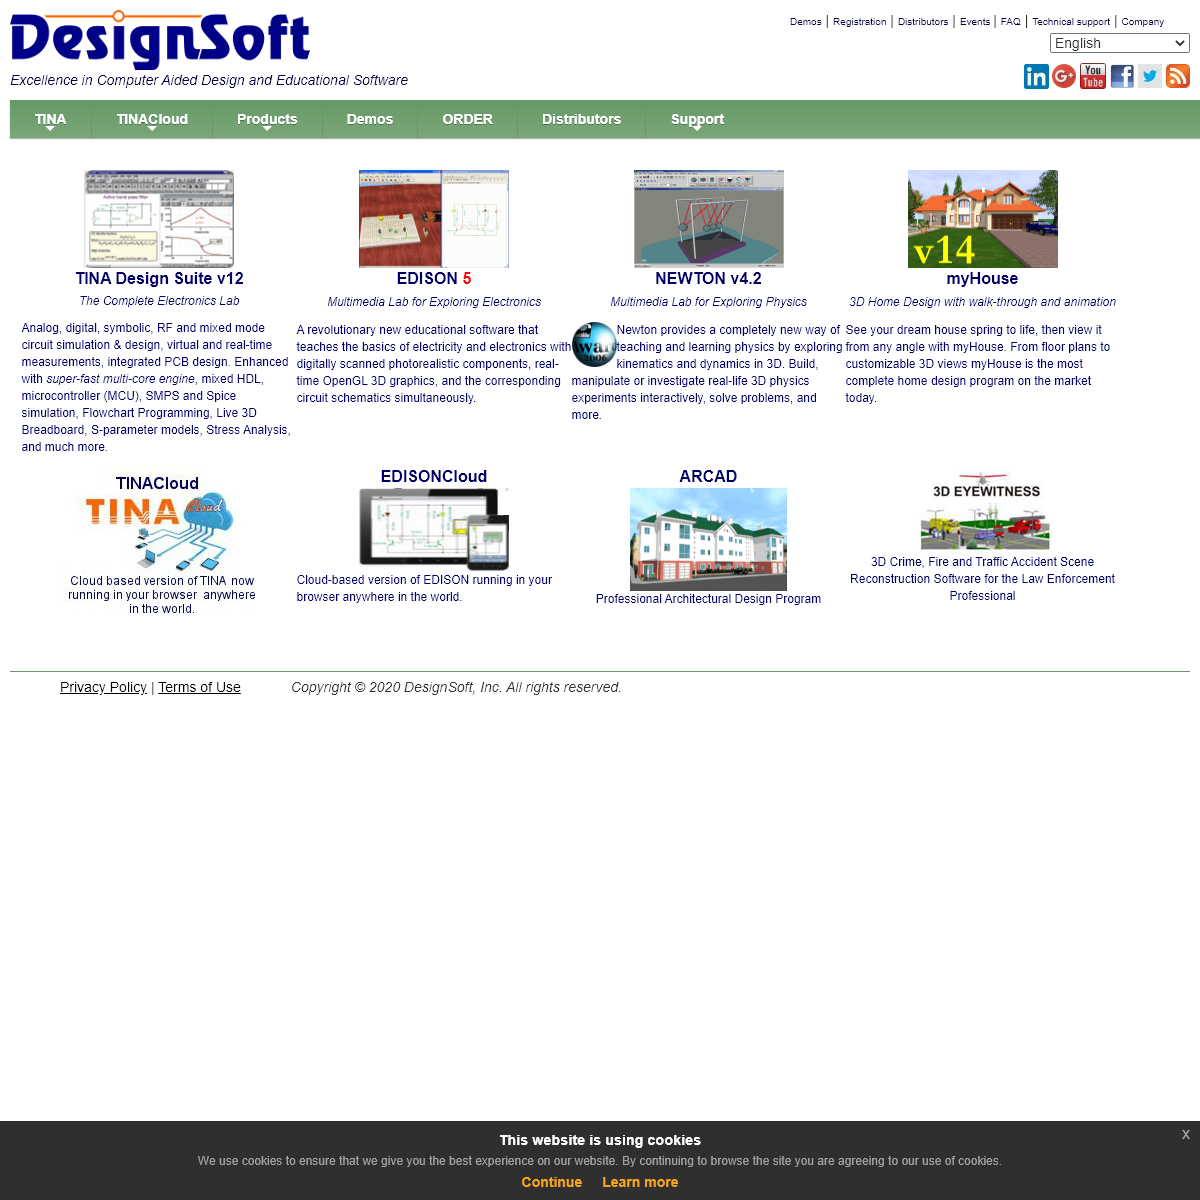 A complete backup of designsoftware.com